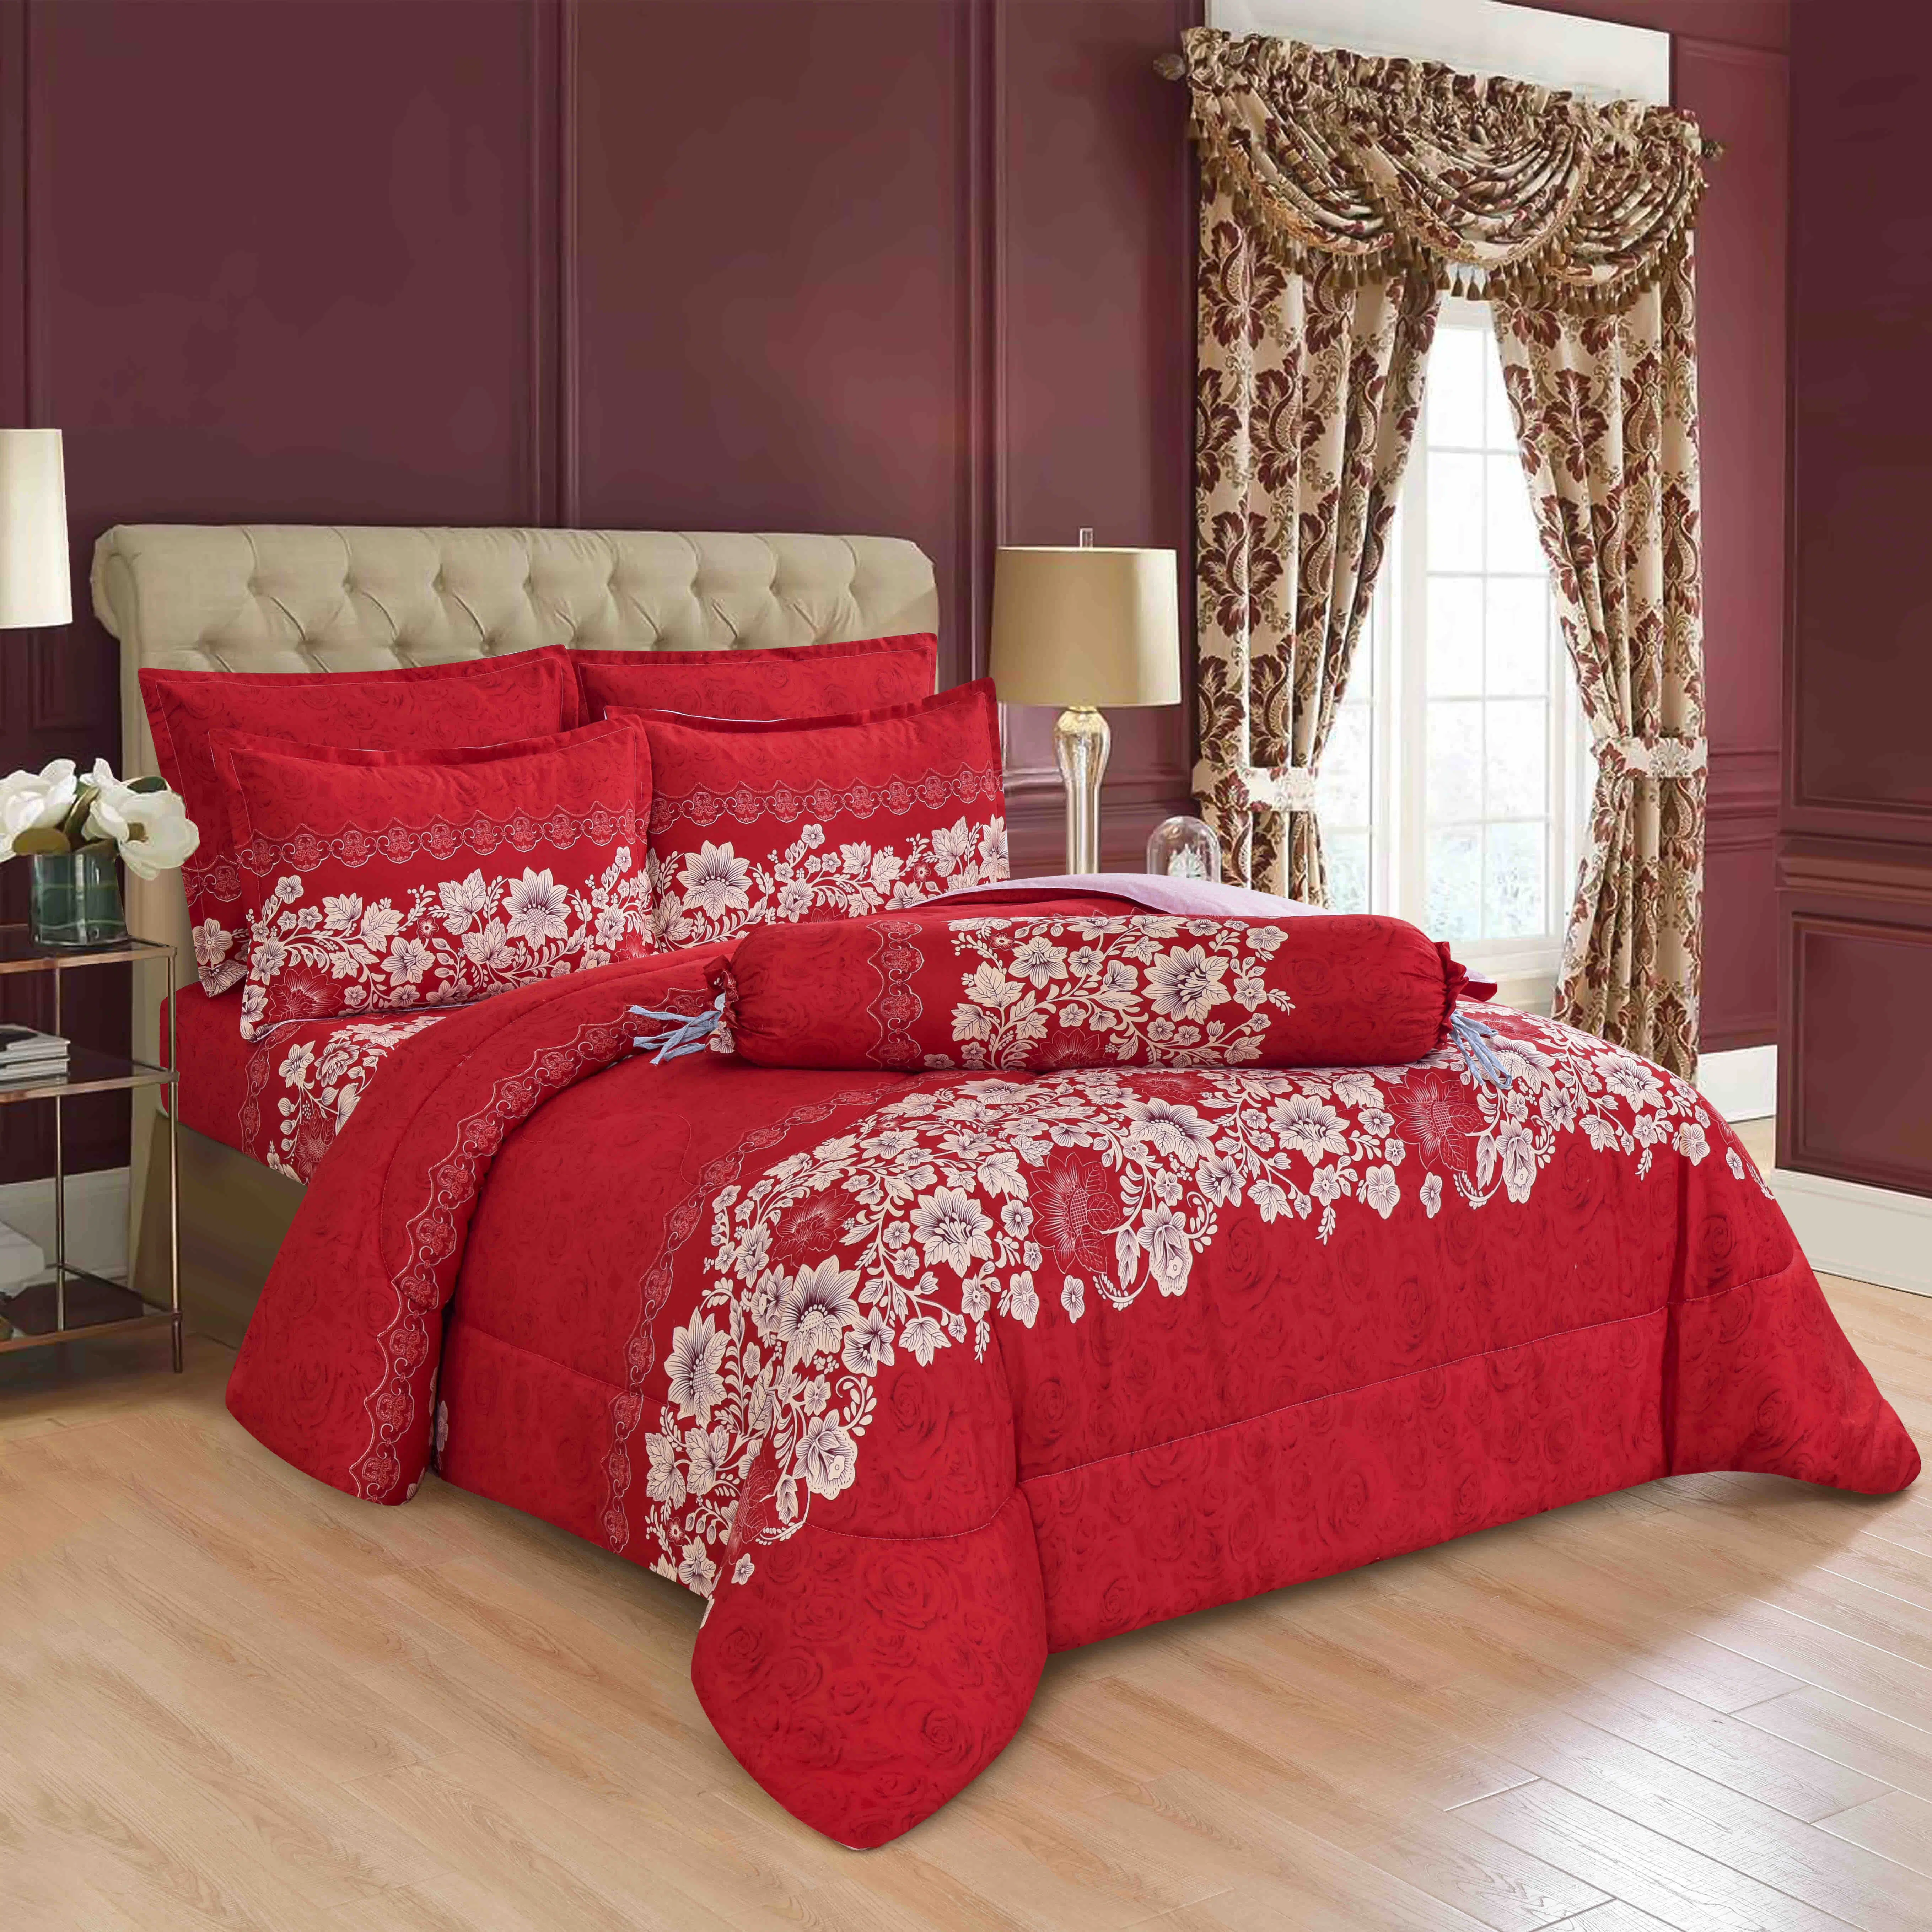 OEM/ODM Red Quilted Blanket High Quality Brushed Polyester Bedding Quilt 4/6/7/8/10 Piece Bedsheet Pillow Sham Microfiber Sanding Printed Textile Comforter Set